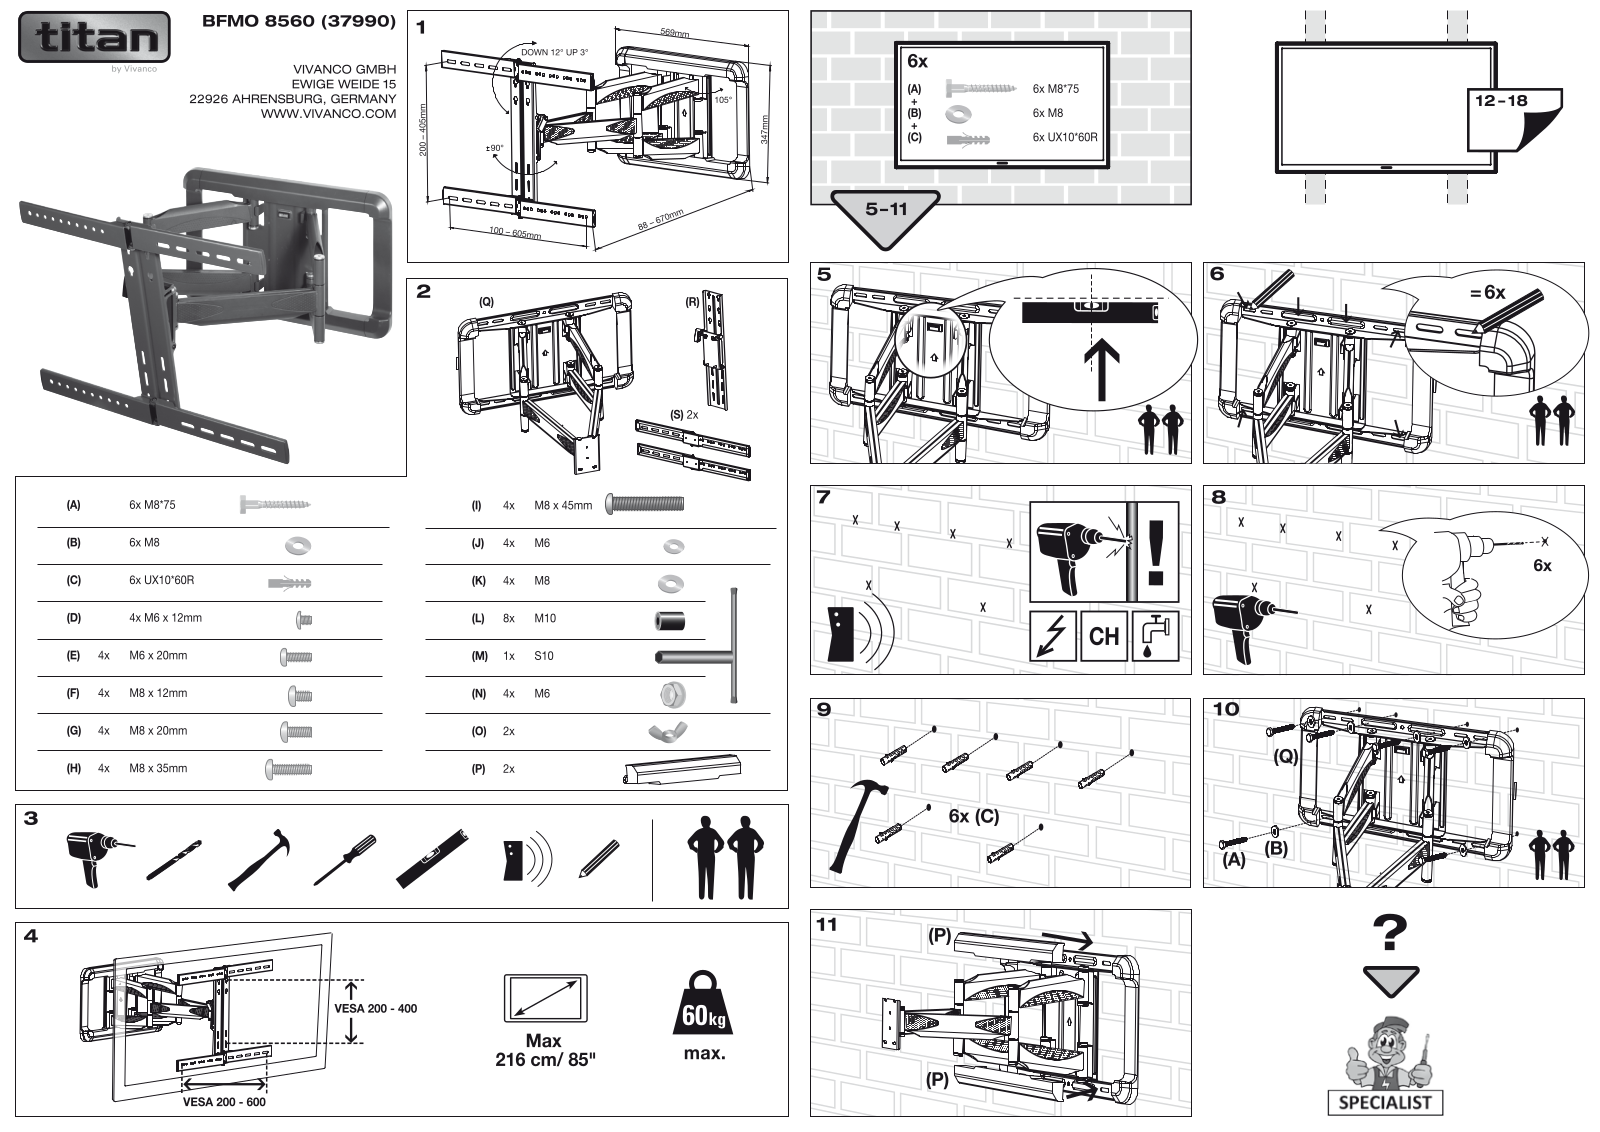 Vivanco Titan BFMO 8560 operation manual